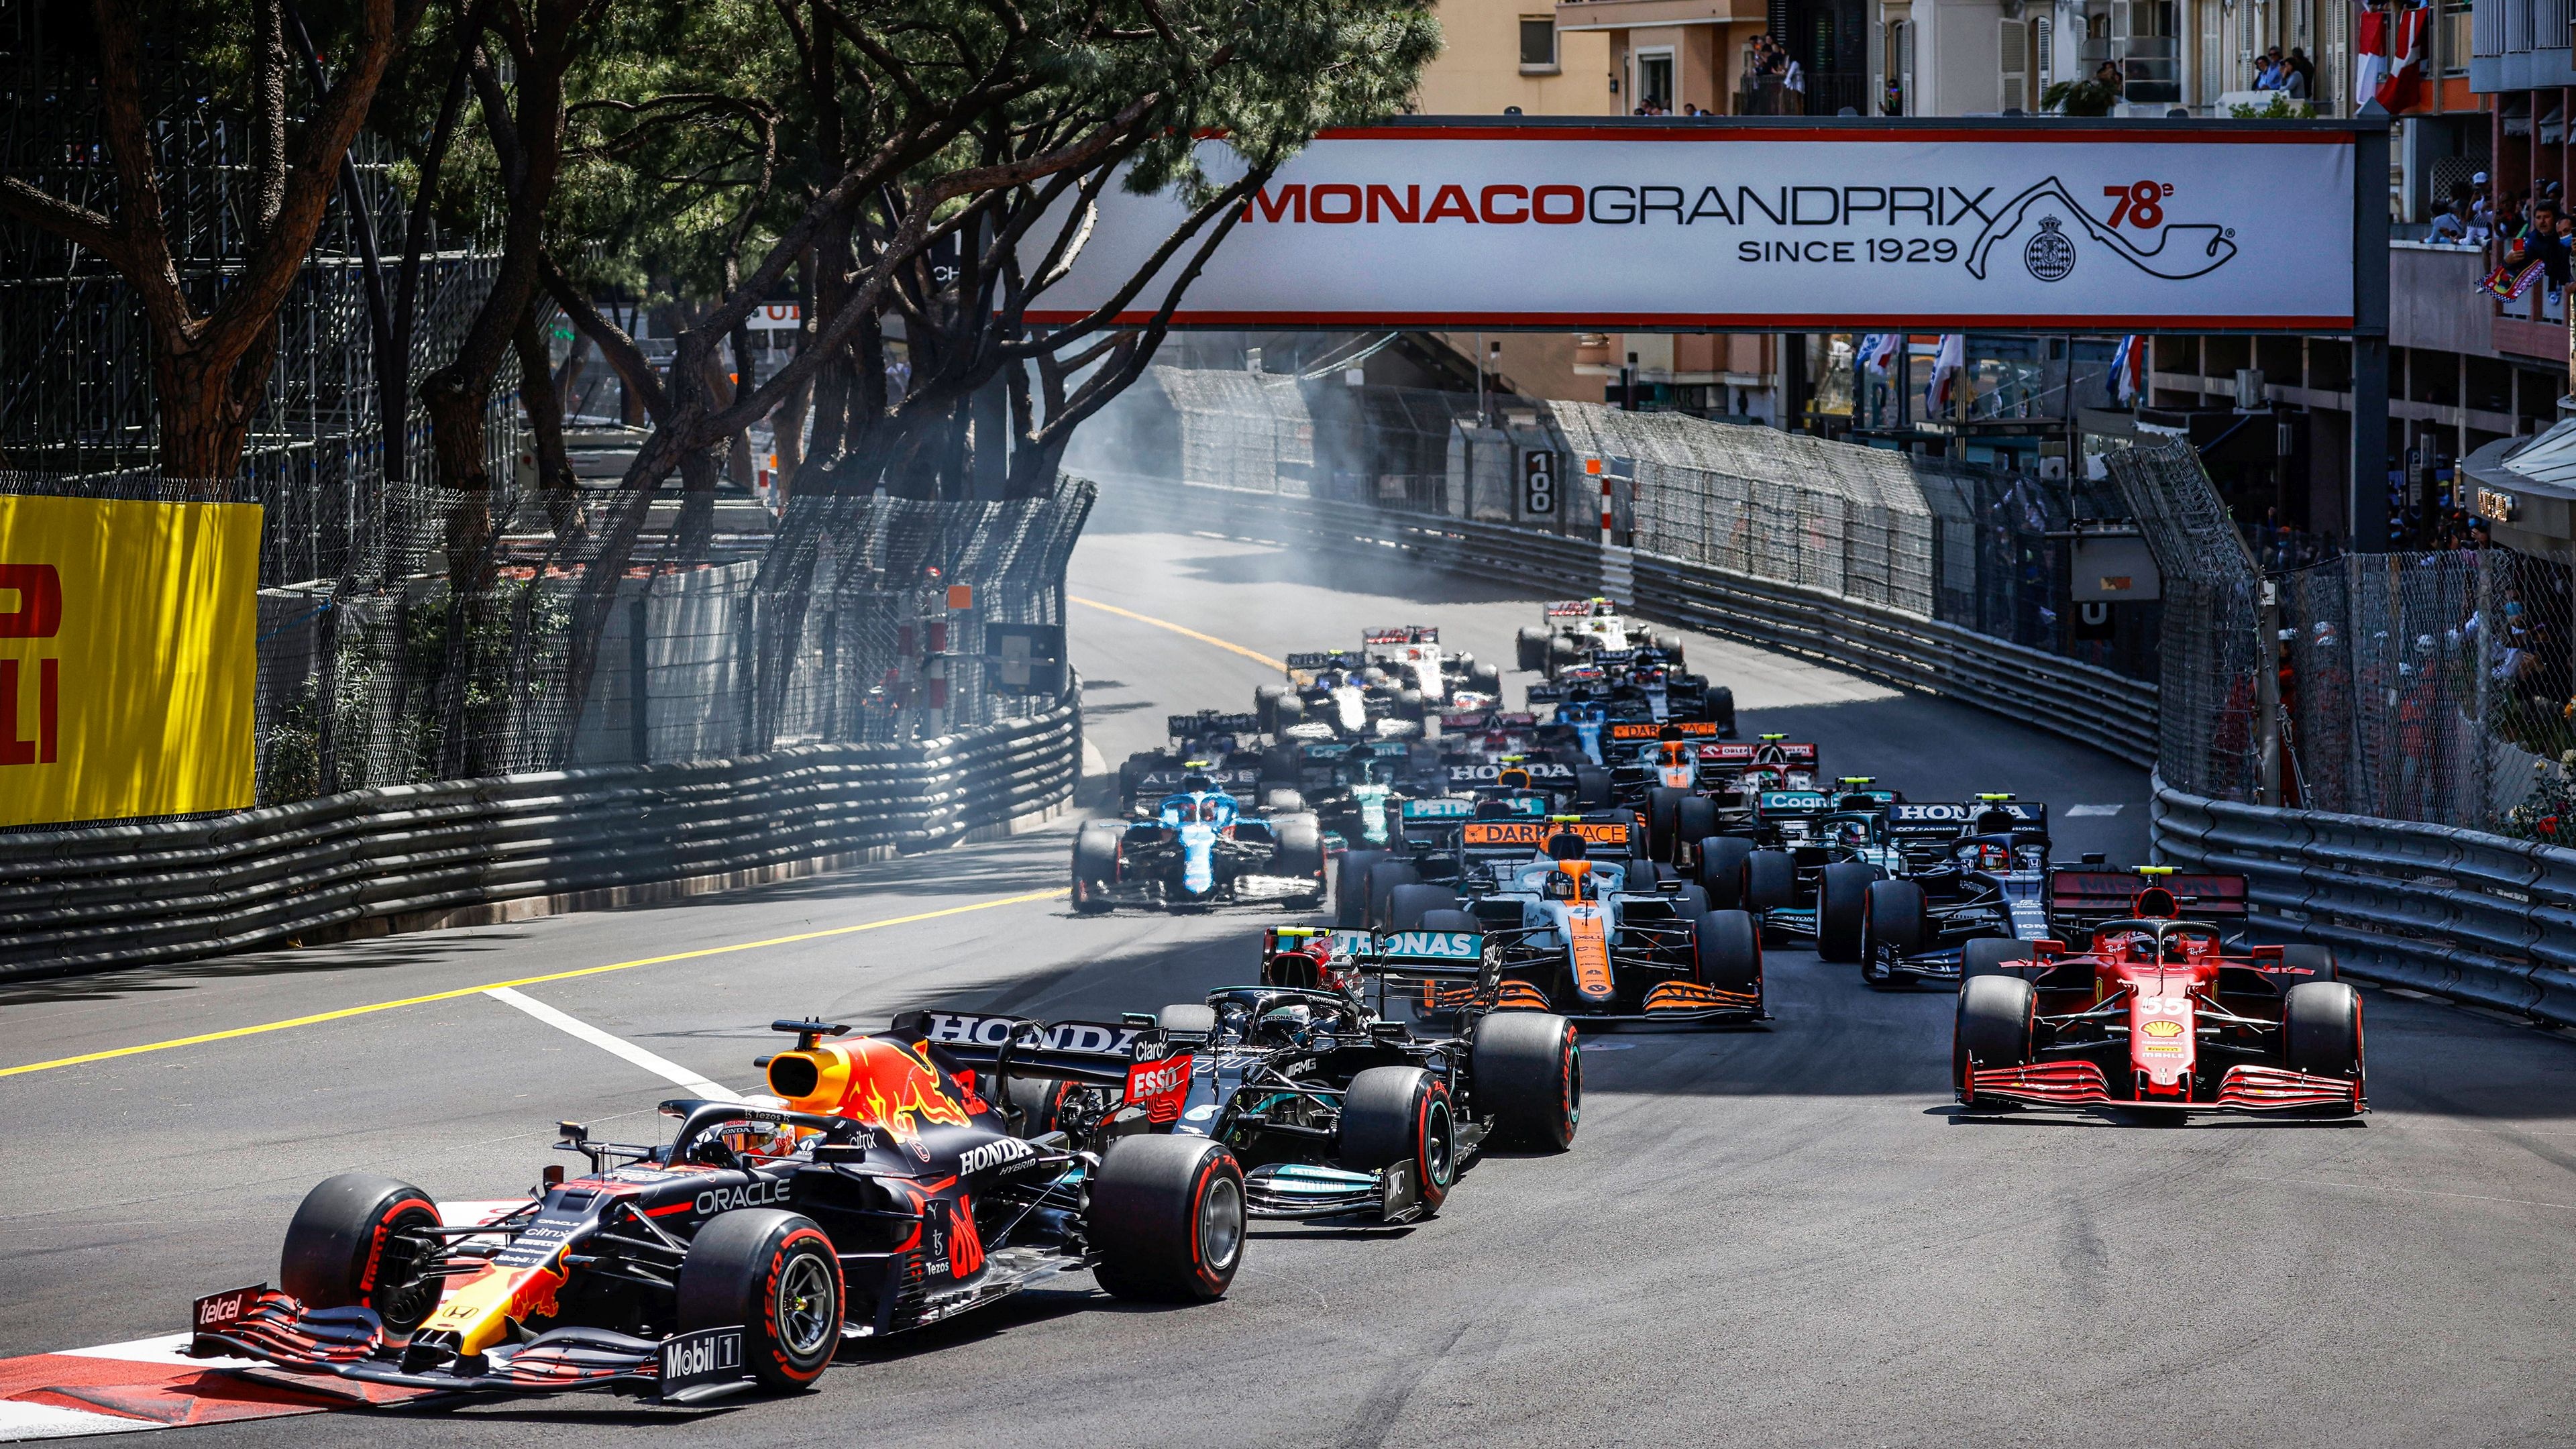 Motorsports: The Monaco Grand Prix, One of the most important and prestigious automobile races in the world. 3840x2160 4K Wallpaper.